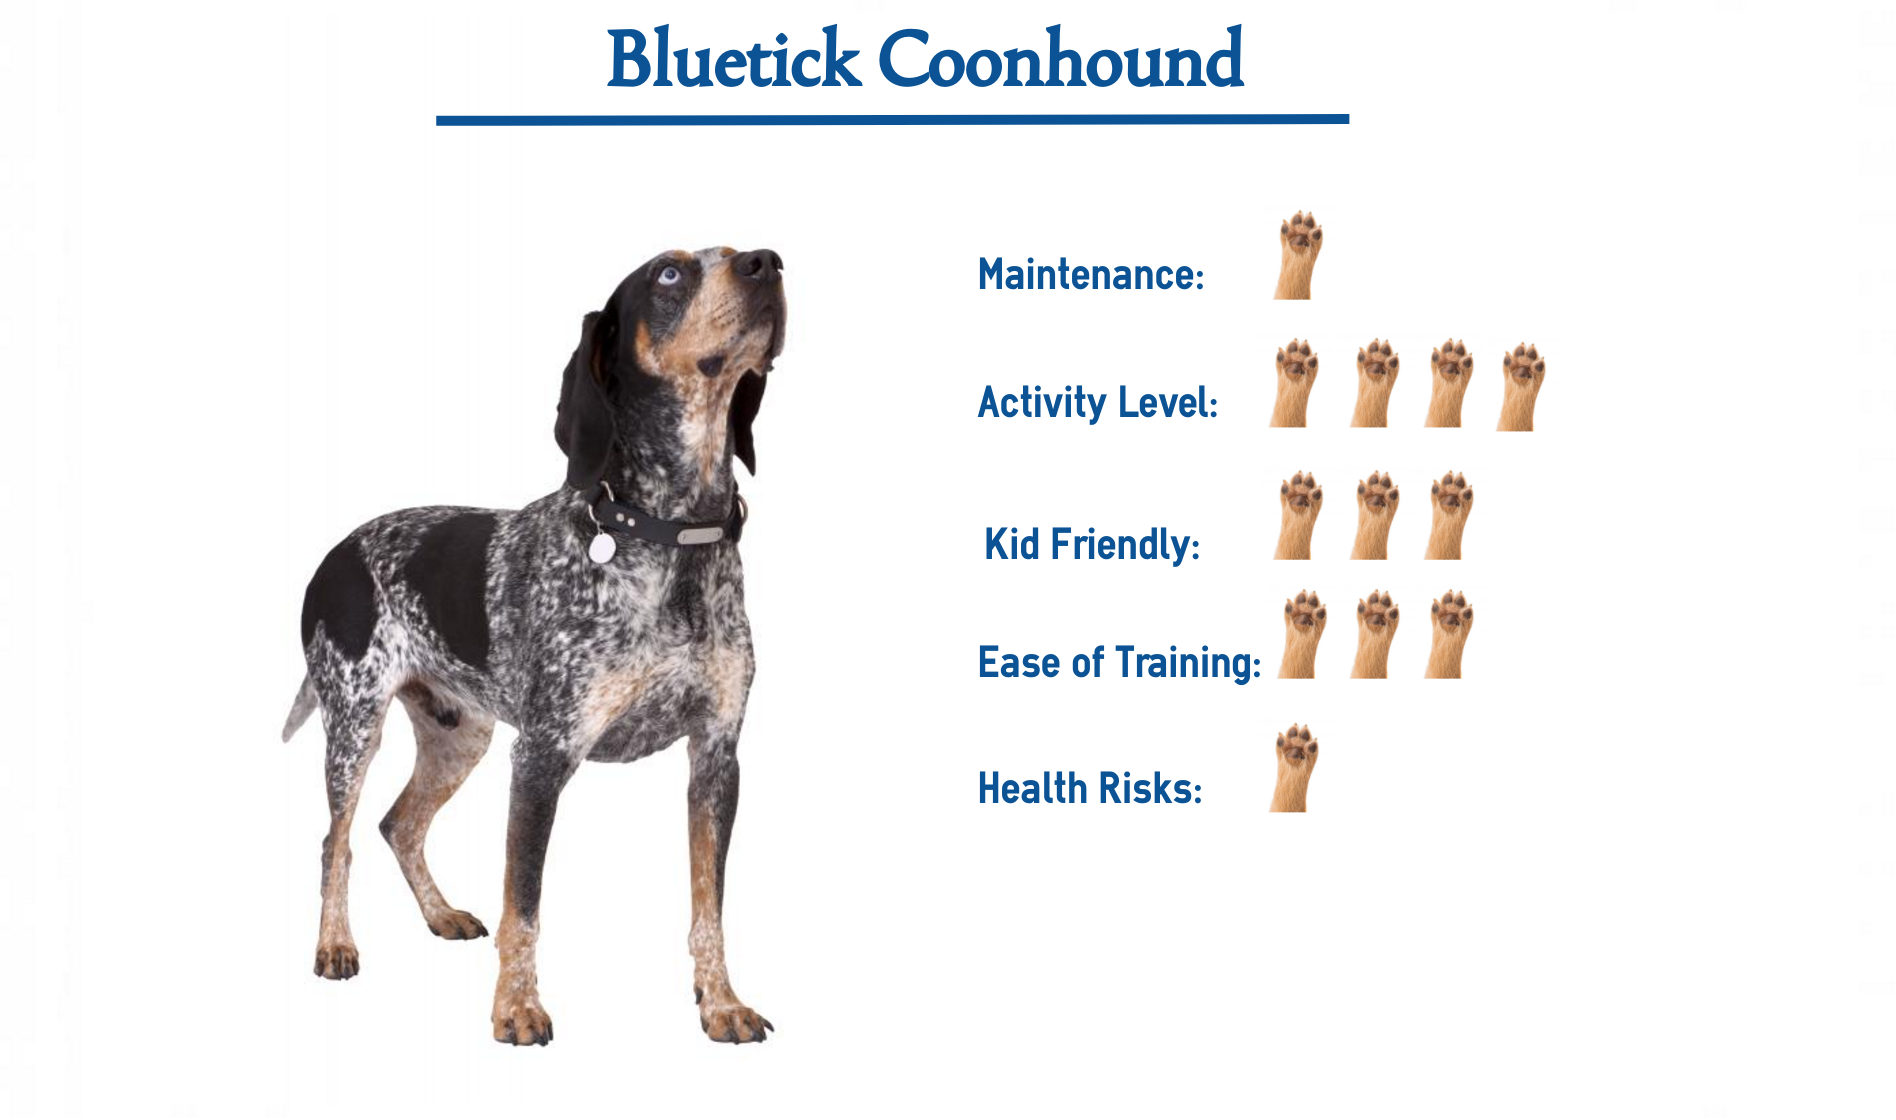 Bluetick Coonhound dog breed